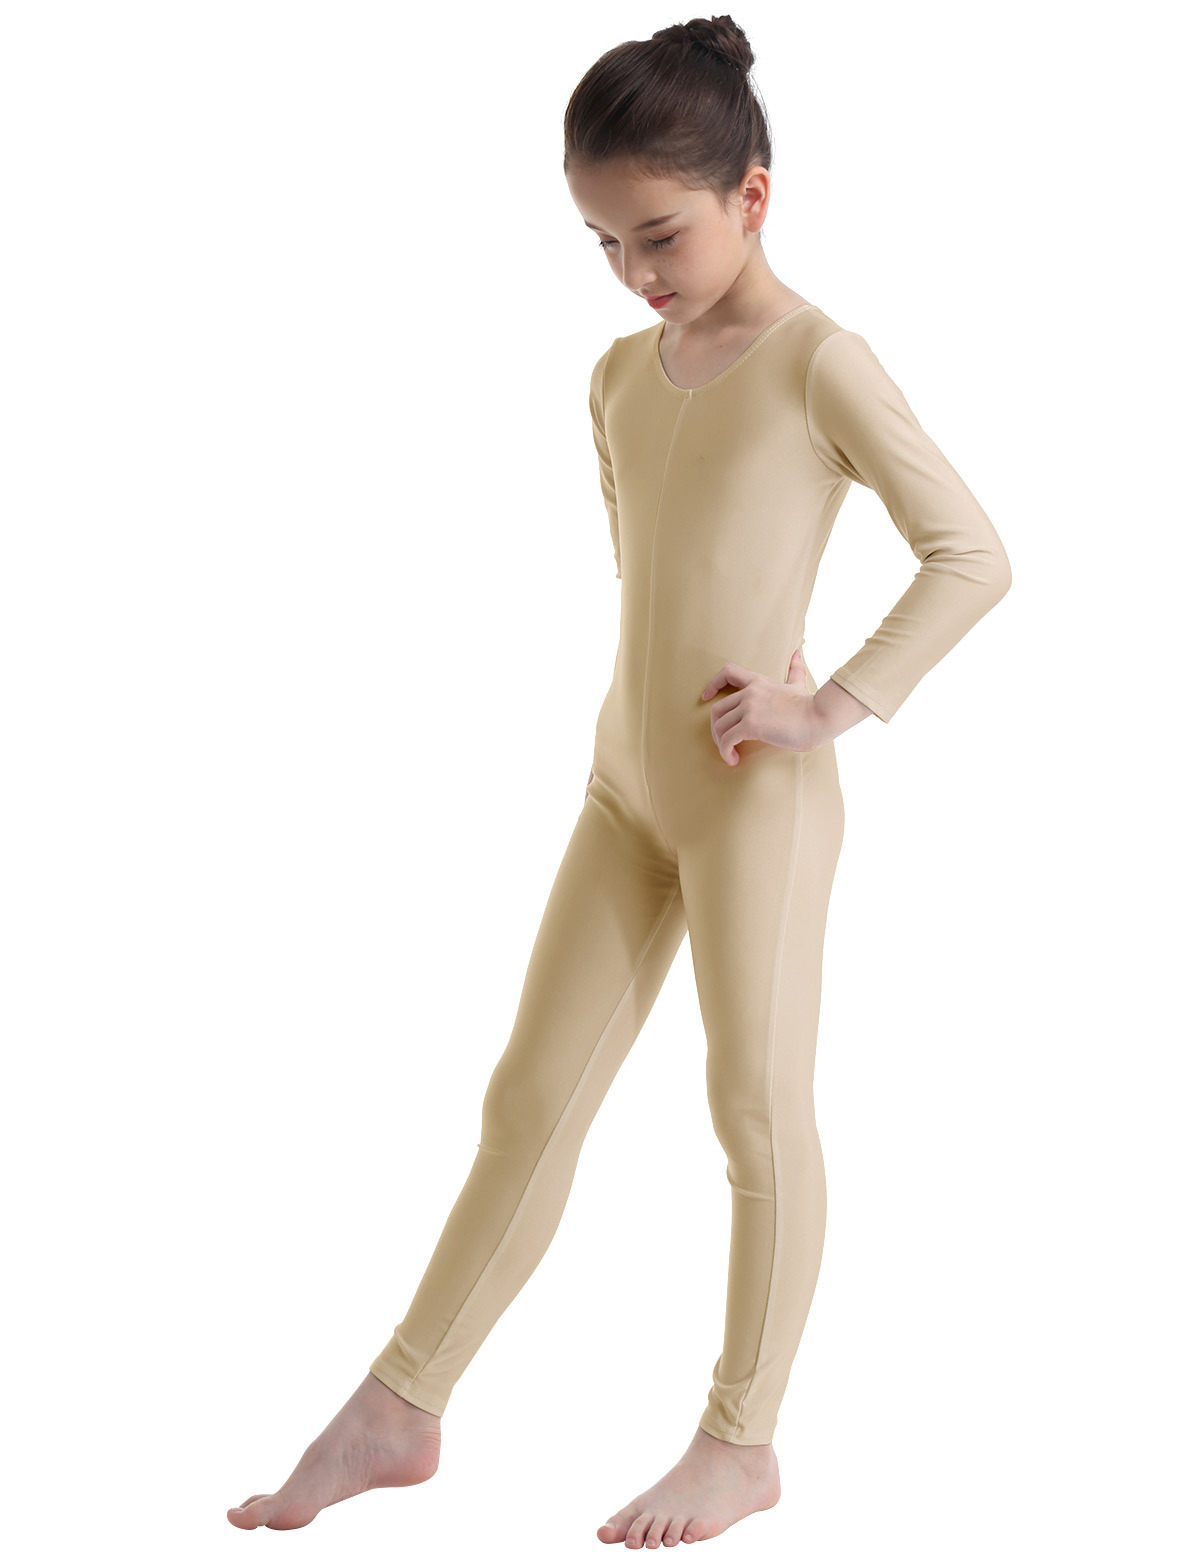 DPOIS Kids Girls Long Sleeve Unitard Leotard Jumpsuit Full Length Bodysuit Nude 11-12 - image 2 of 7